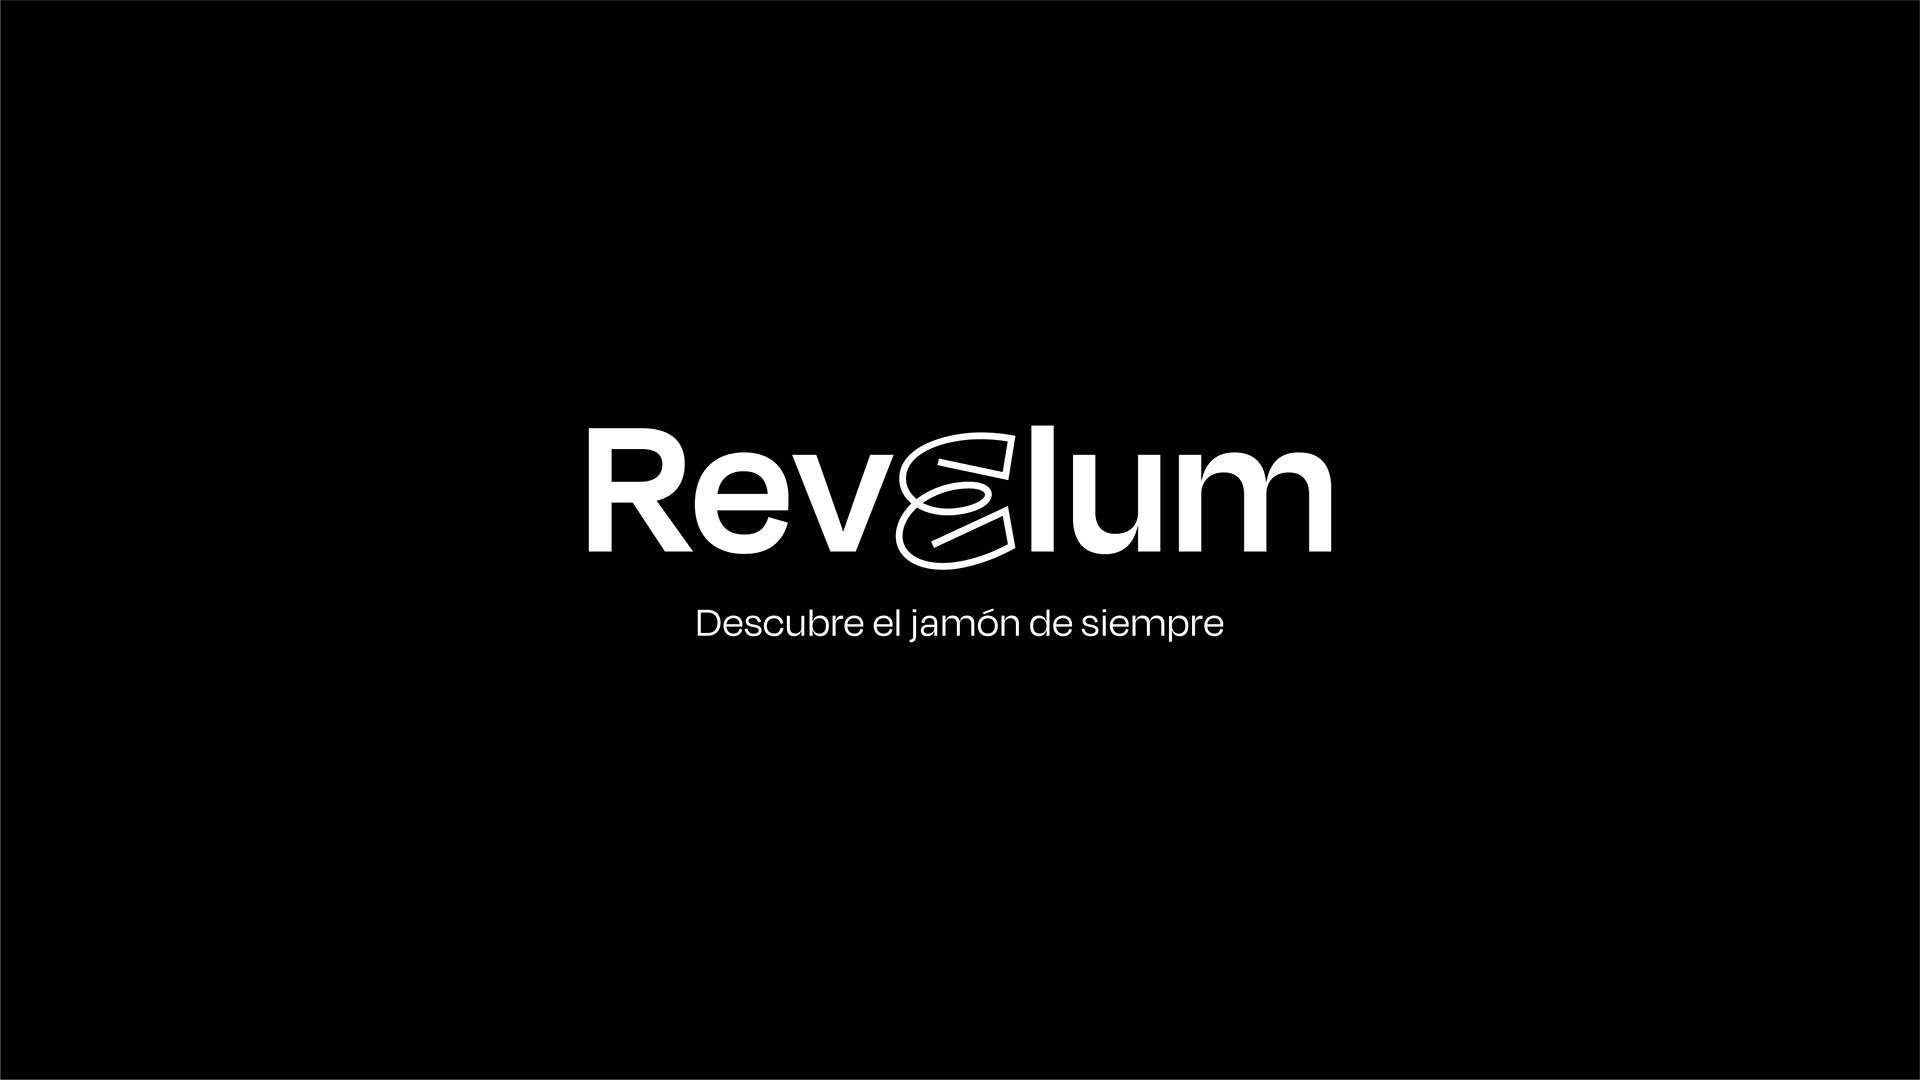 Revelum design - ham jamon packaging